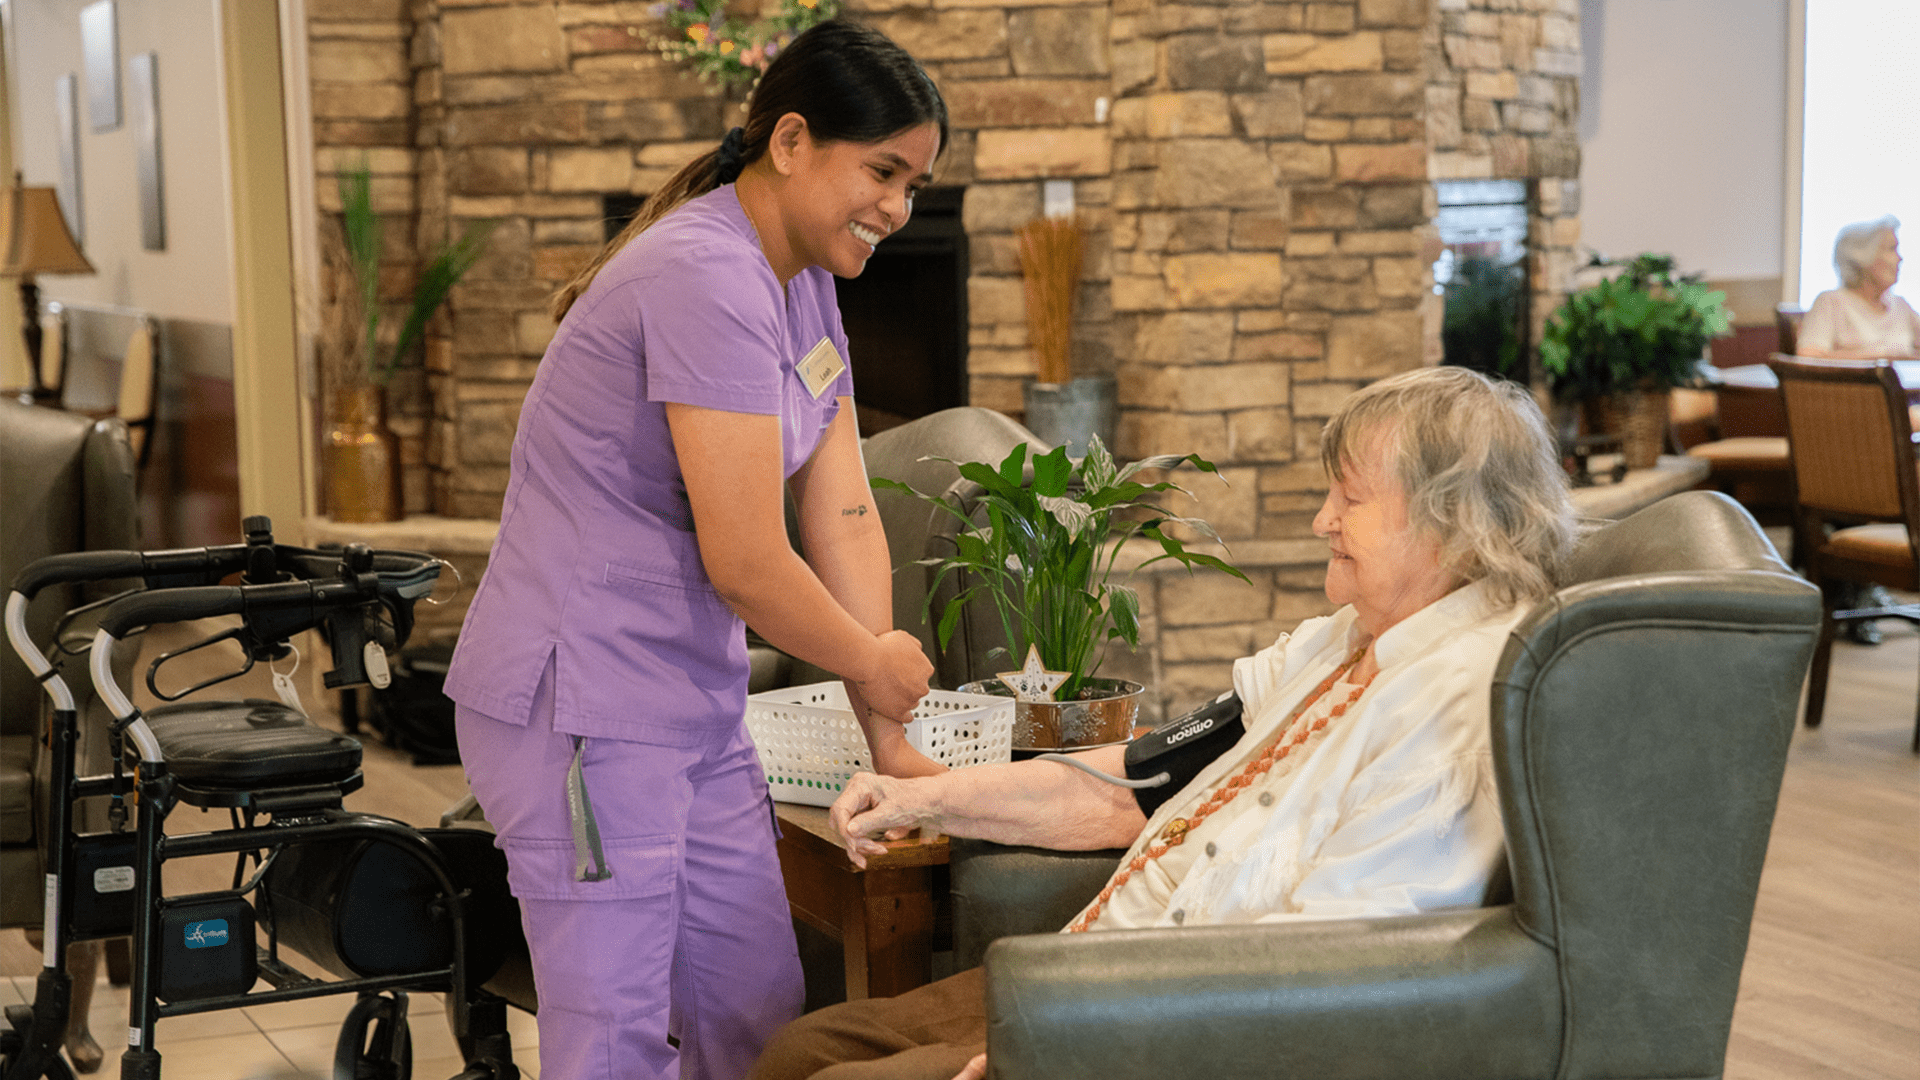 Nurse in purple scrubs helping a senior sitting in a chair